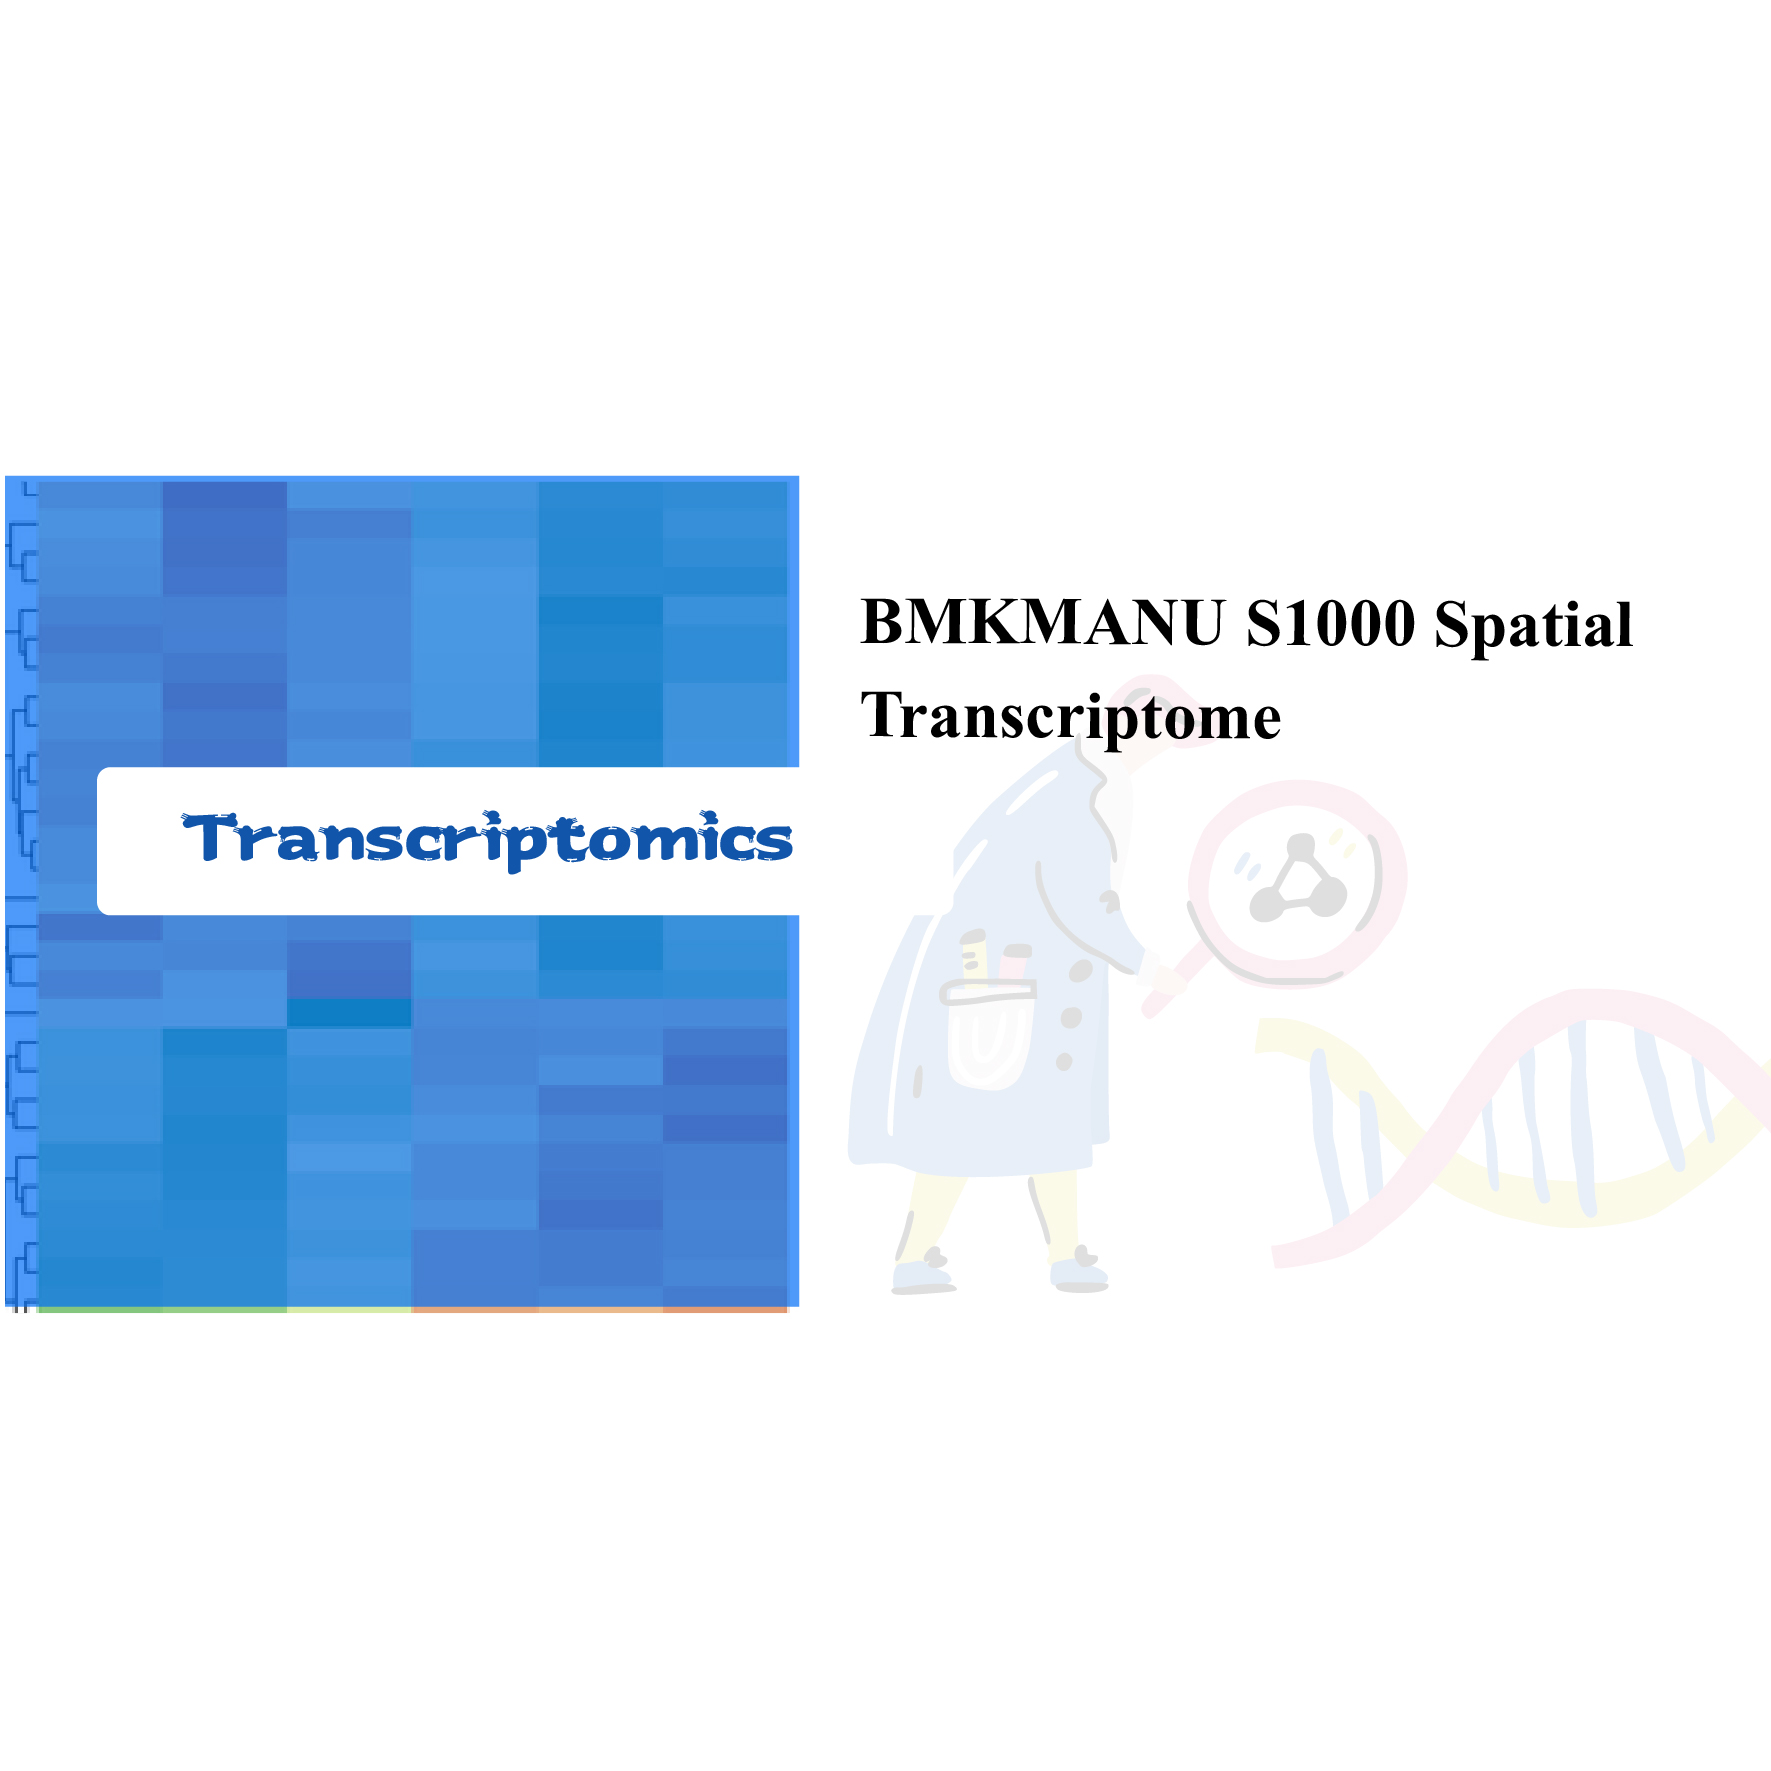 BMKMANU S1000 Spatial Transscriptome